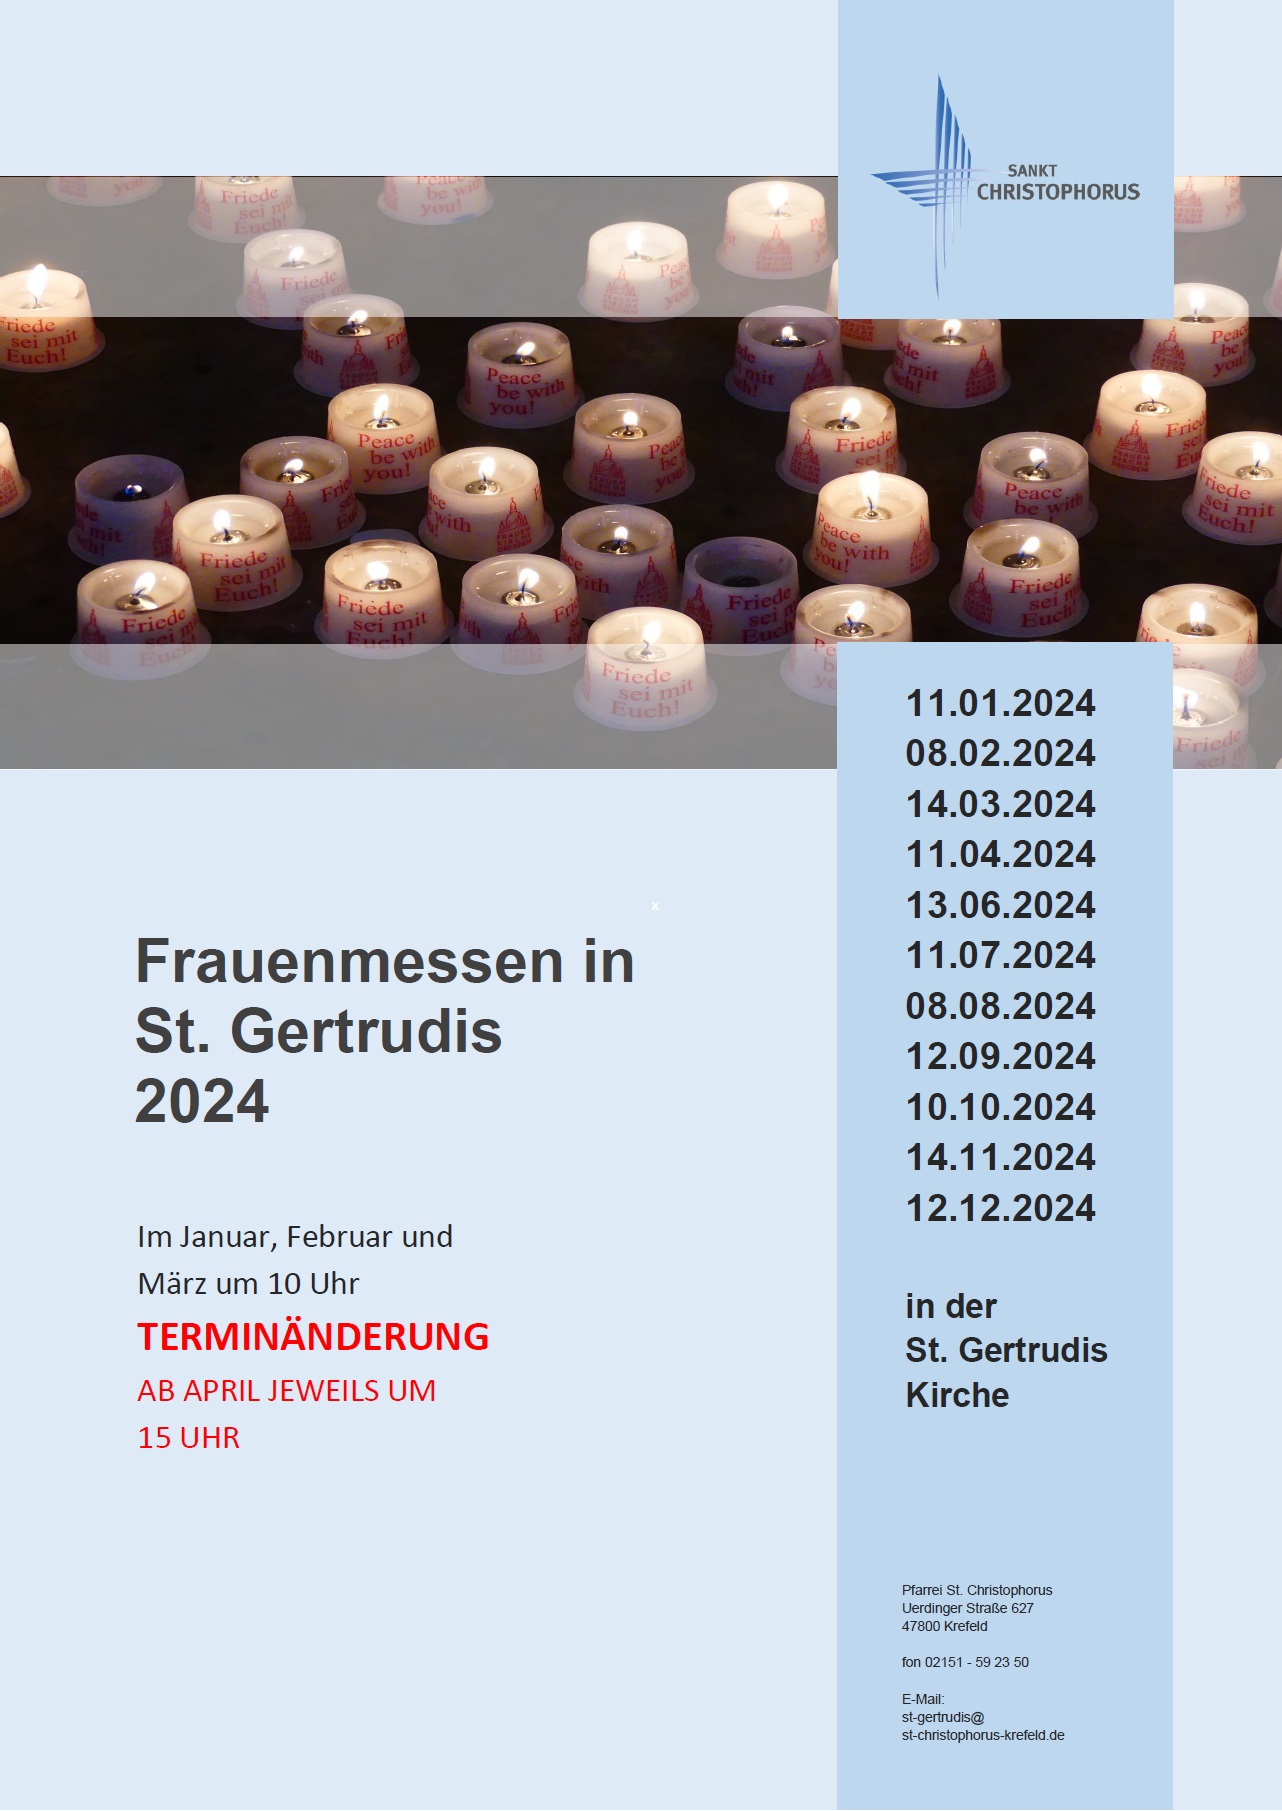 Frauenmessen2024St.Gertrudis (c) St Christophorus